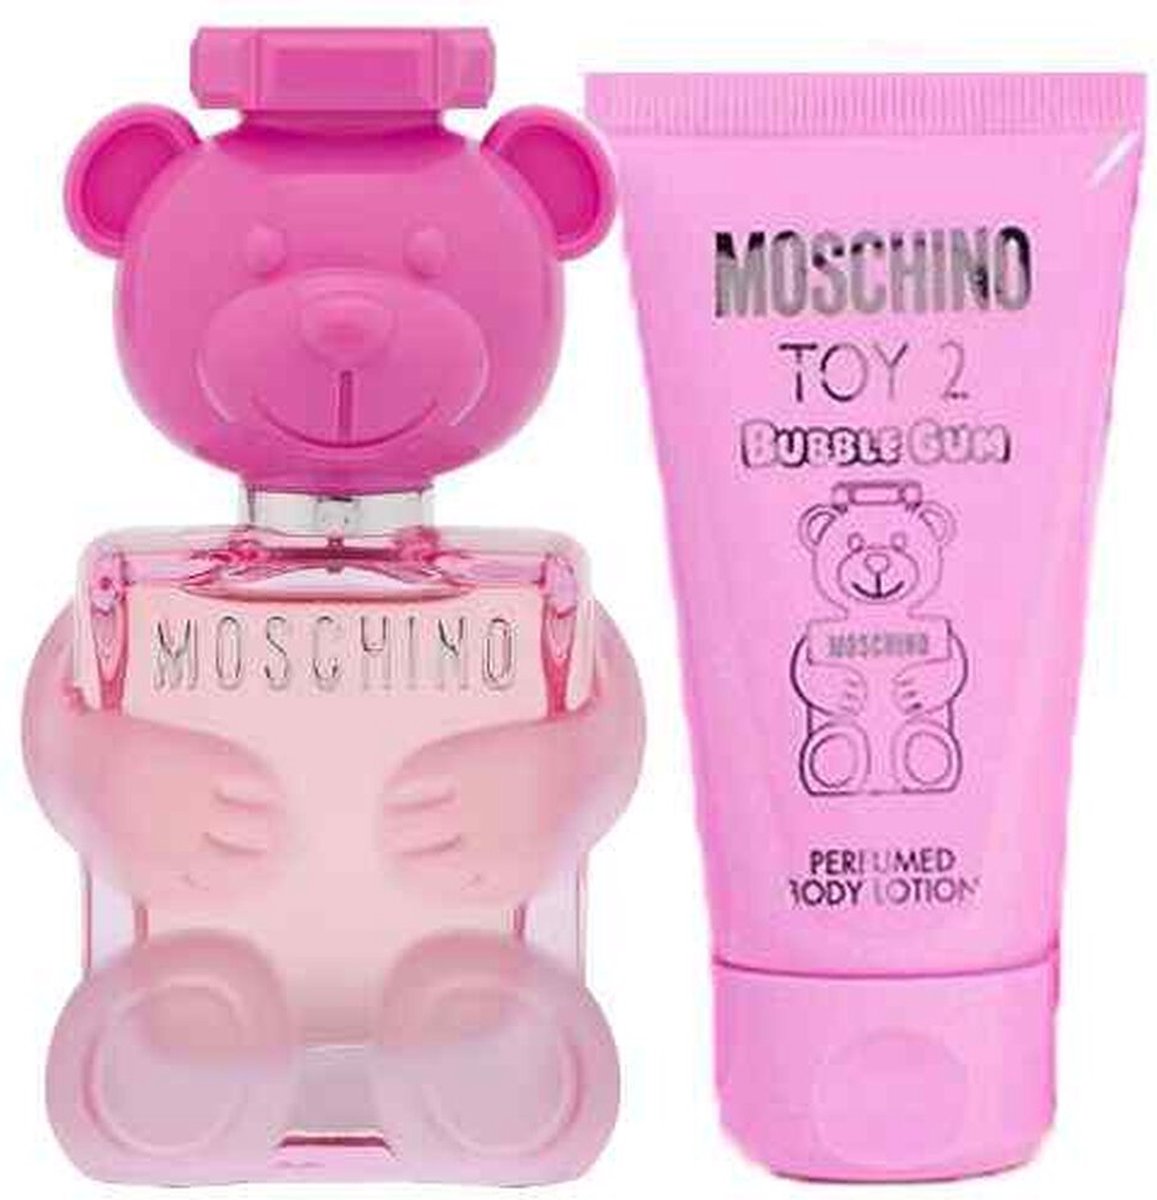 moschino toy 2 bubble gum giftset 80ml